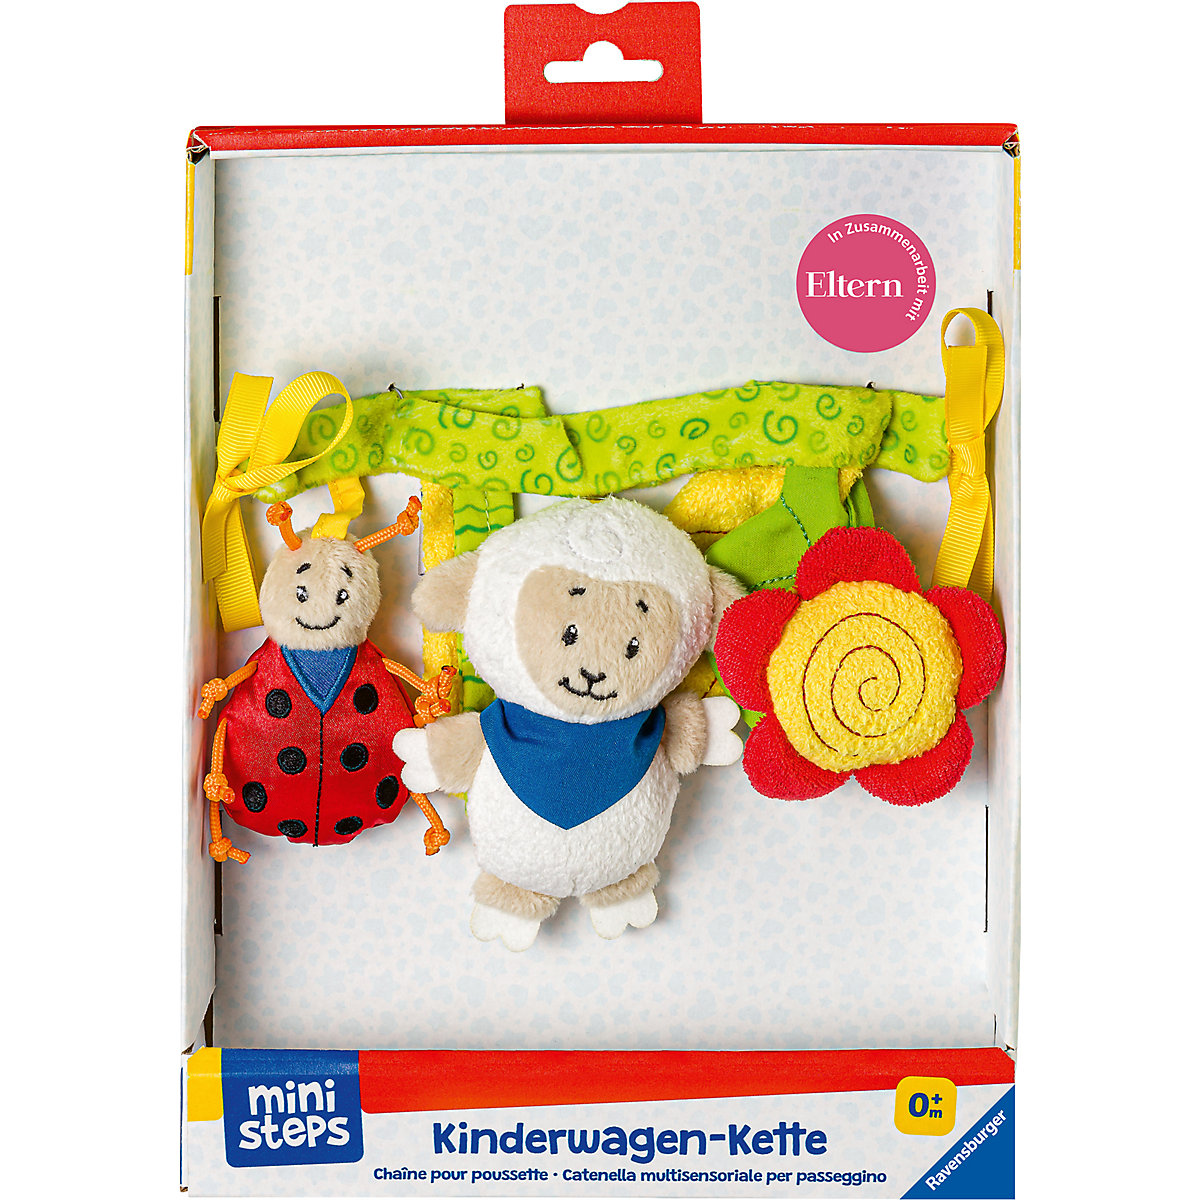 Ravensburger ministeps Spielzeug Kinderwagen-Kette 04448